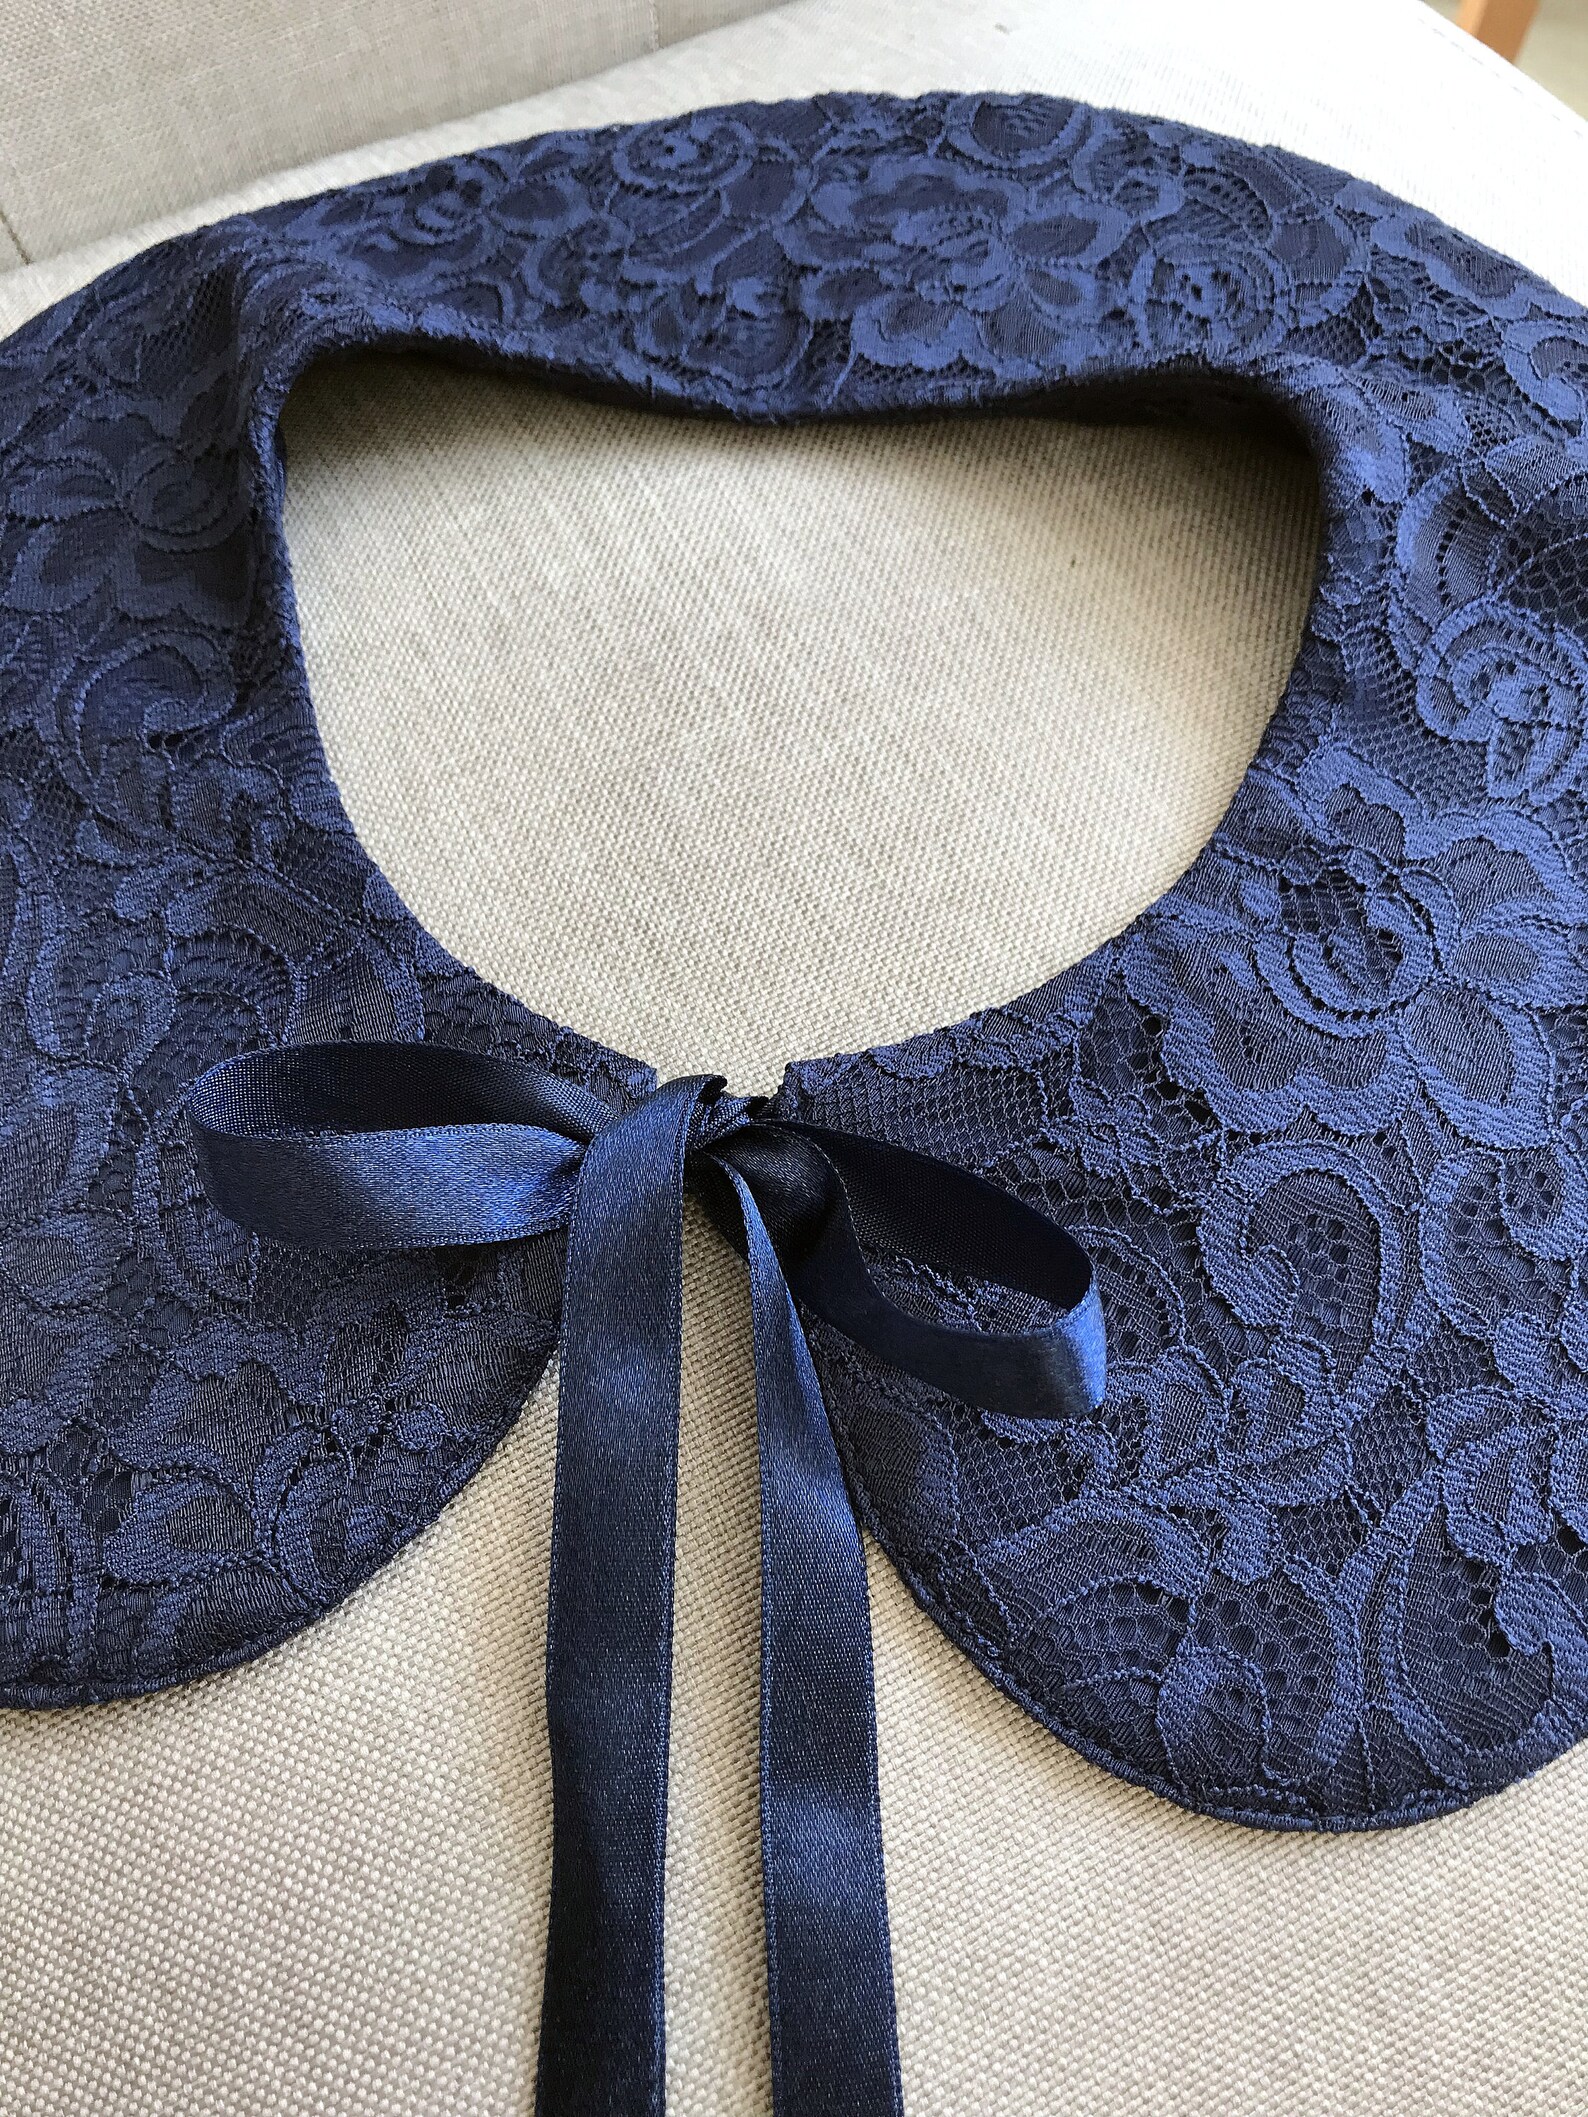 Blue lace collar Women neck accessory dark blue lace collar | Etsy